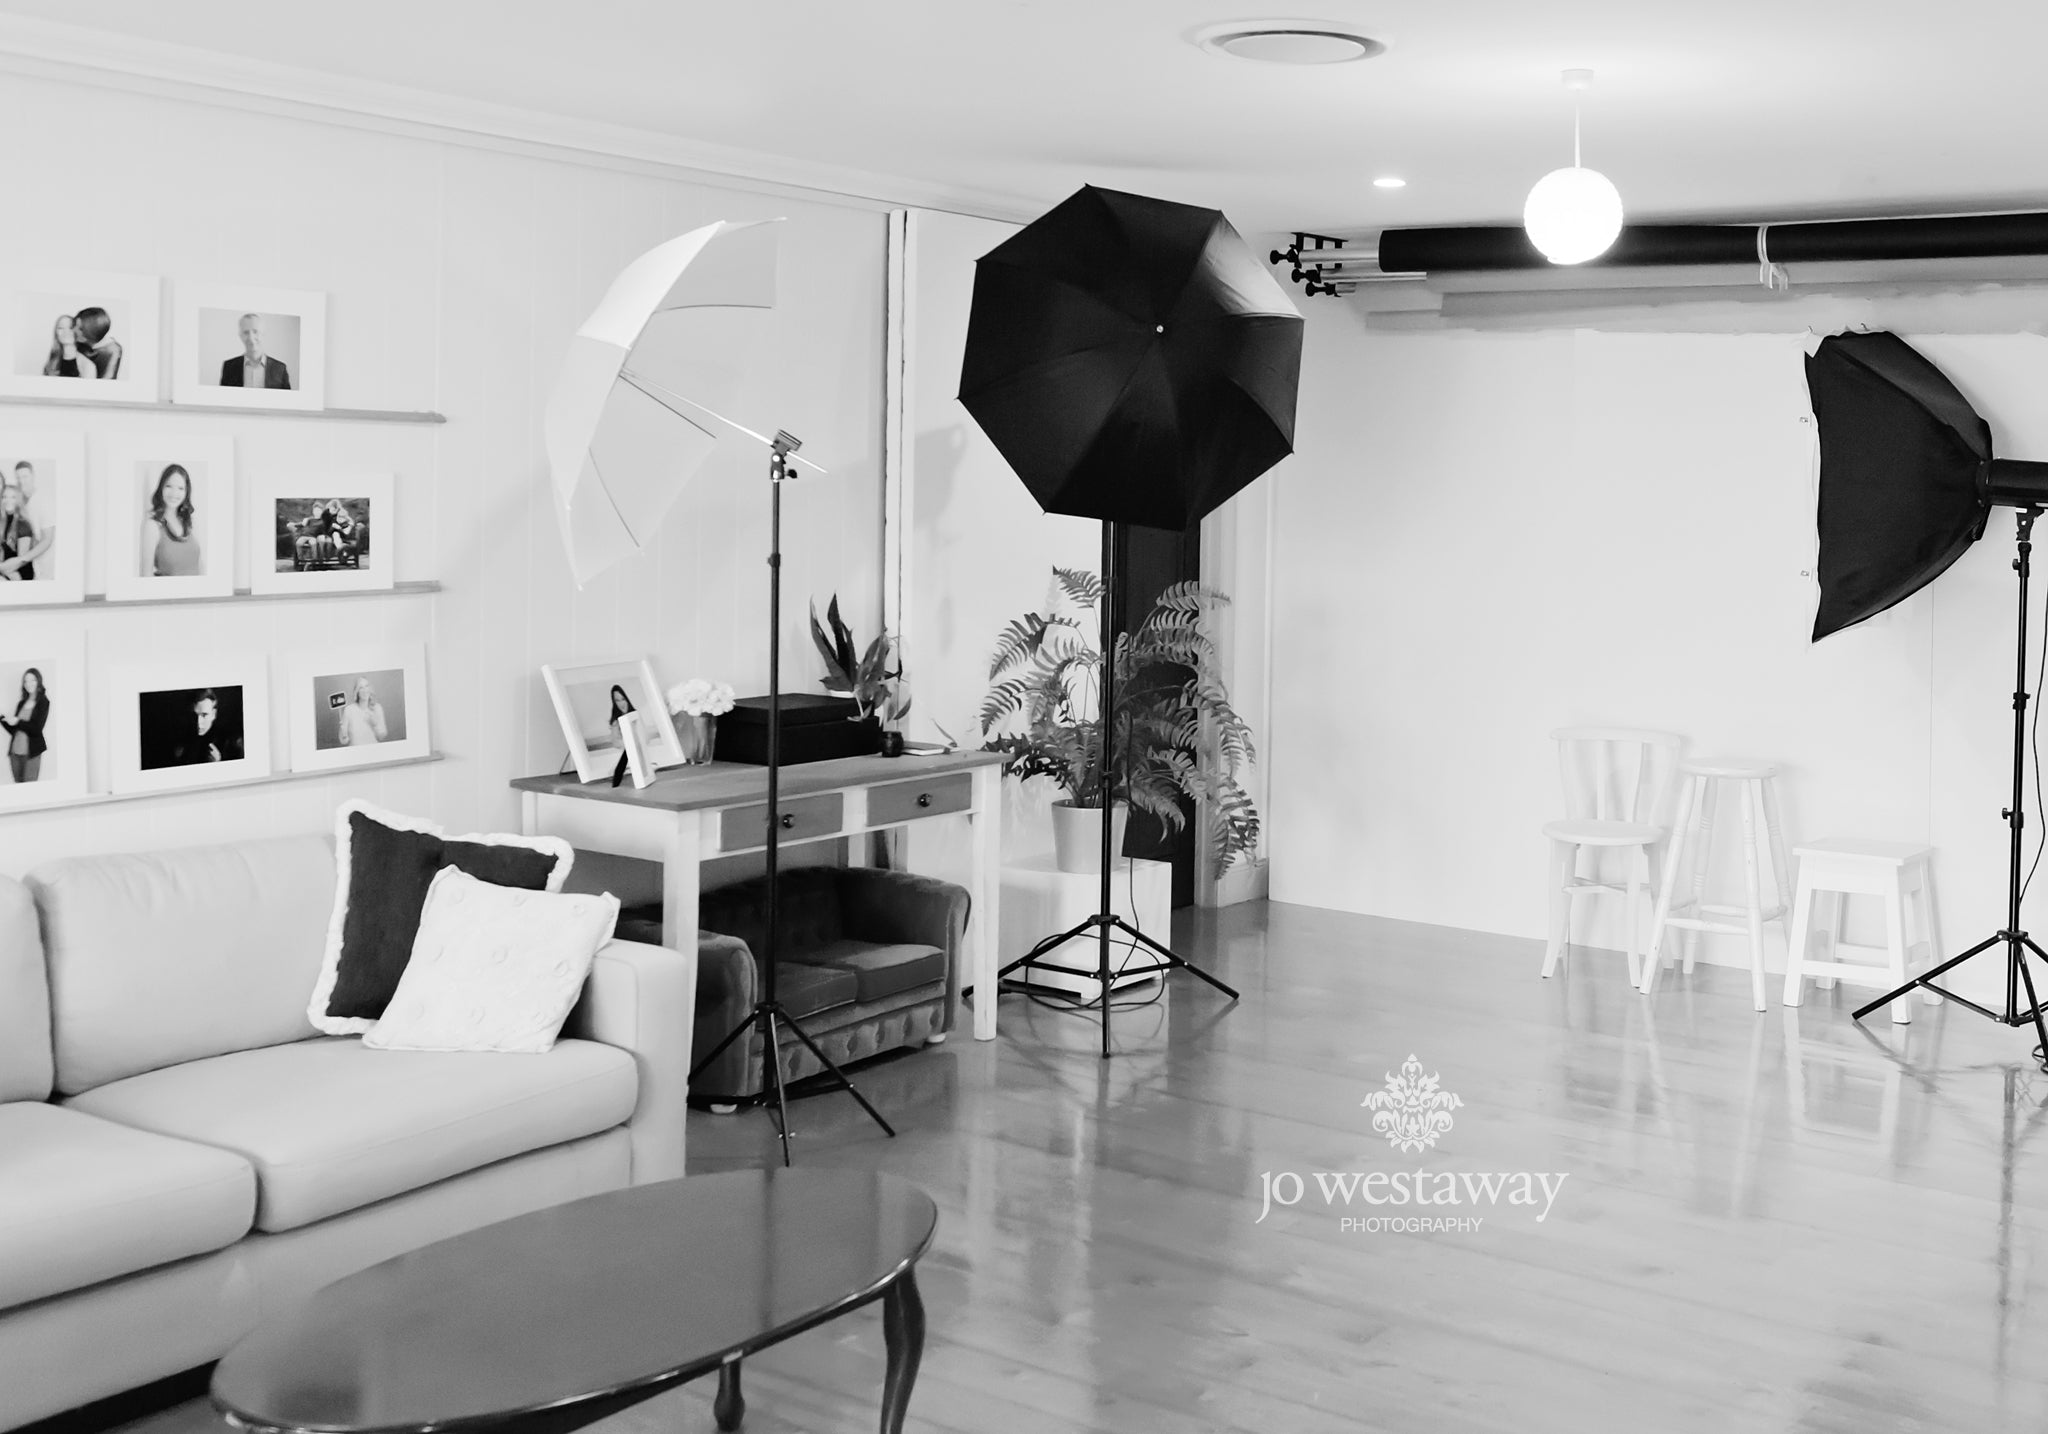 Brisbane personal brand photography studio for business women & entrepreneurs